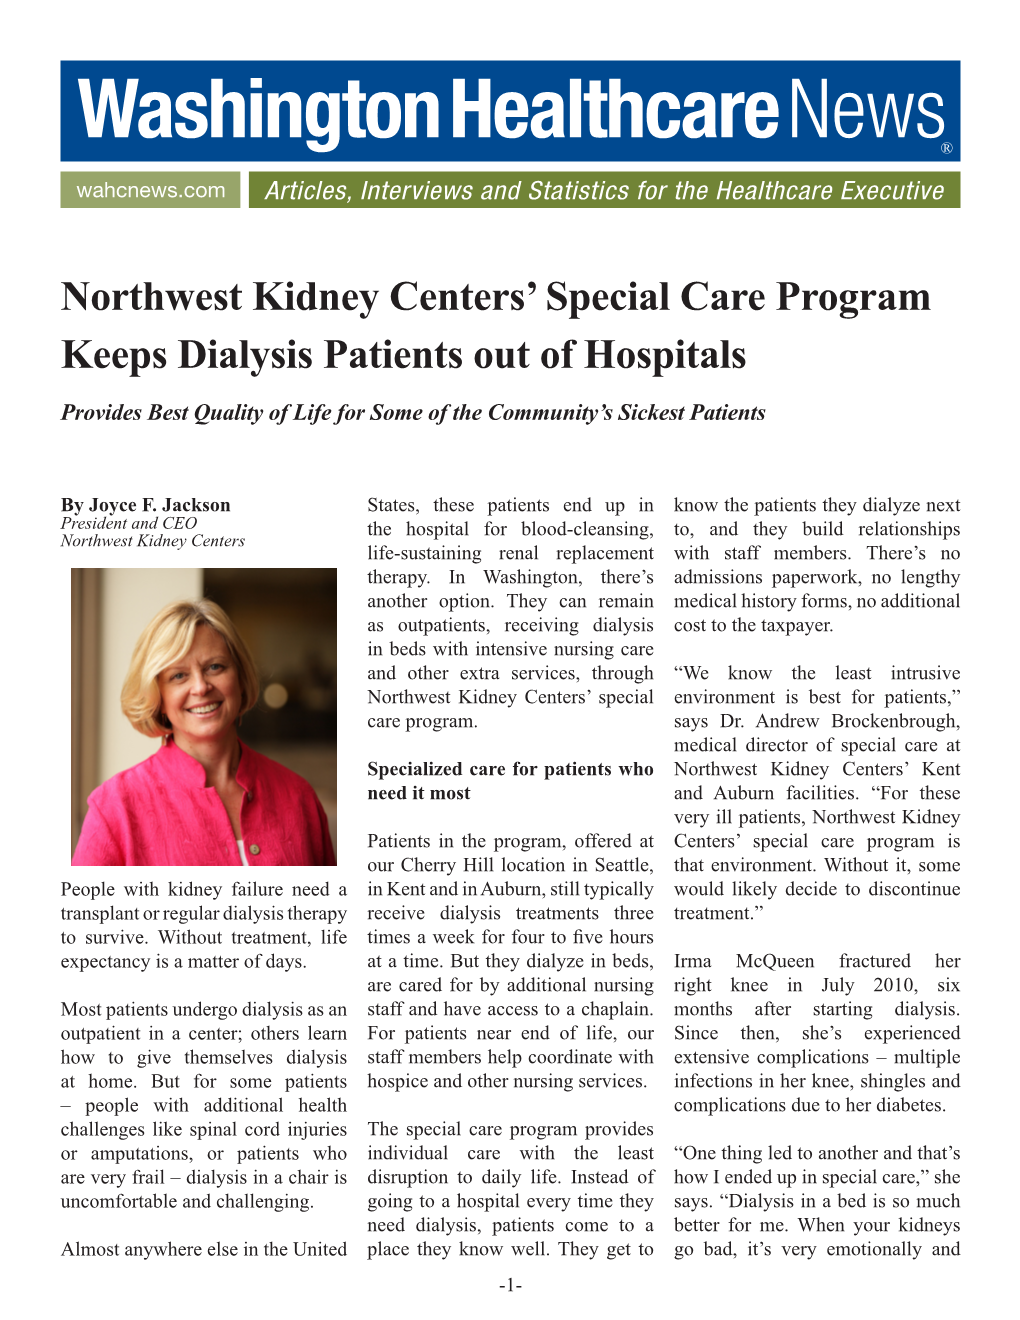 Northwest Kidney Centers' Special Care Program Keeps Dialysis